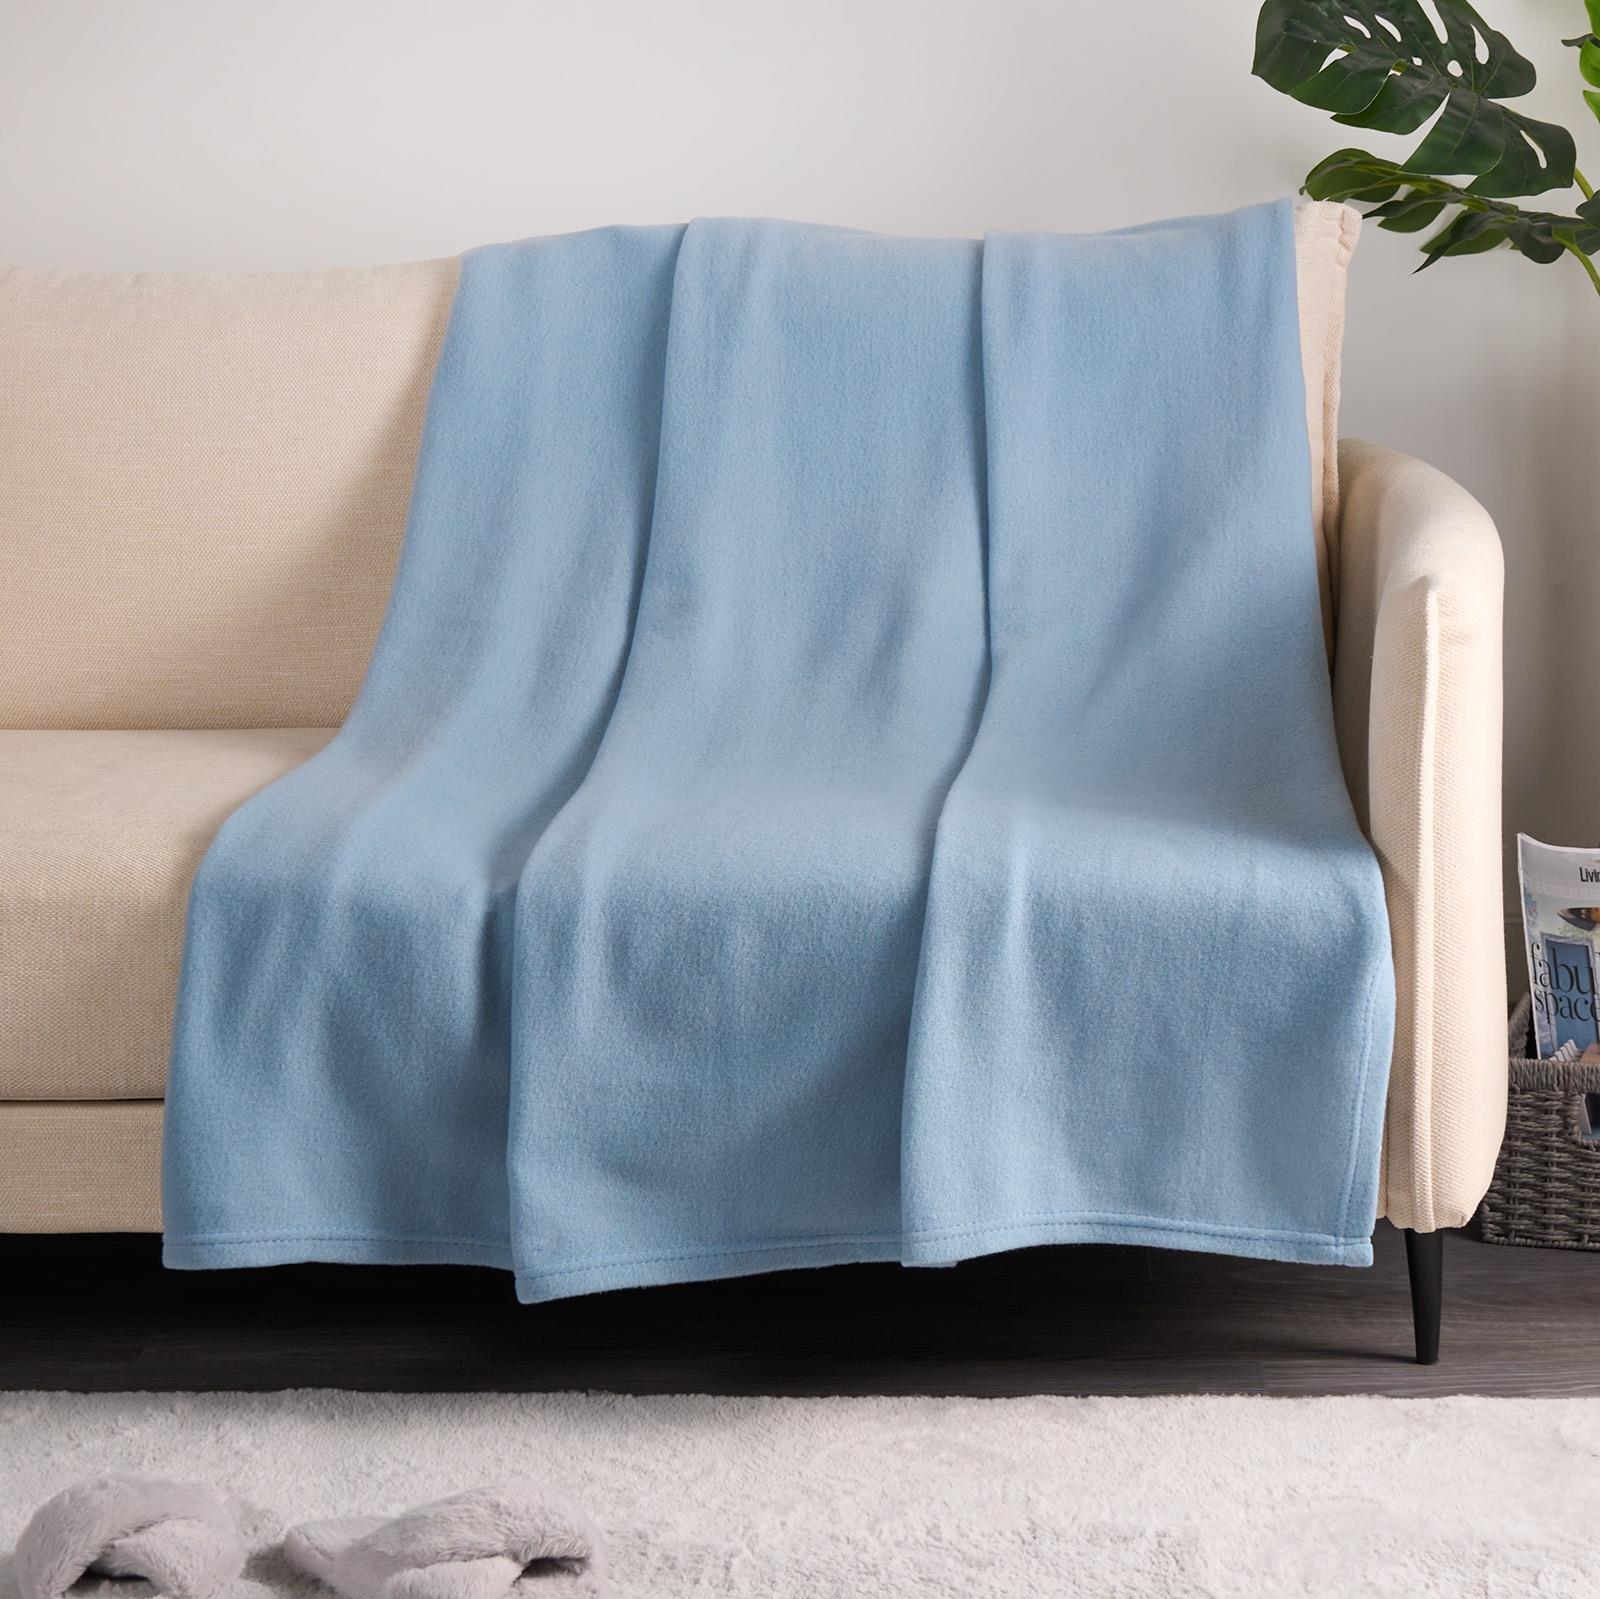 Wholesale 10 Pack Plain Fleece Blanket Sofa Throw Joblot